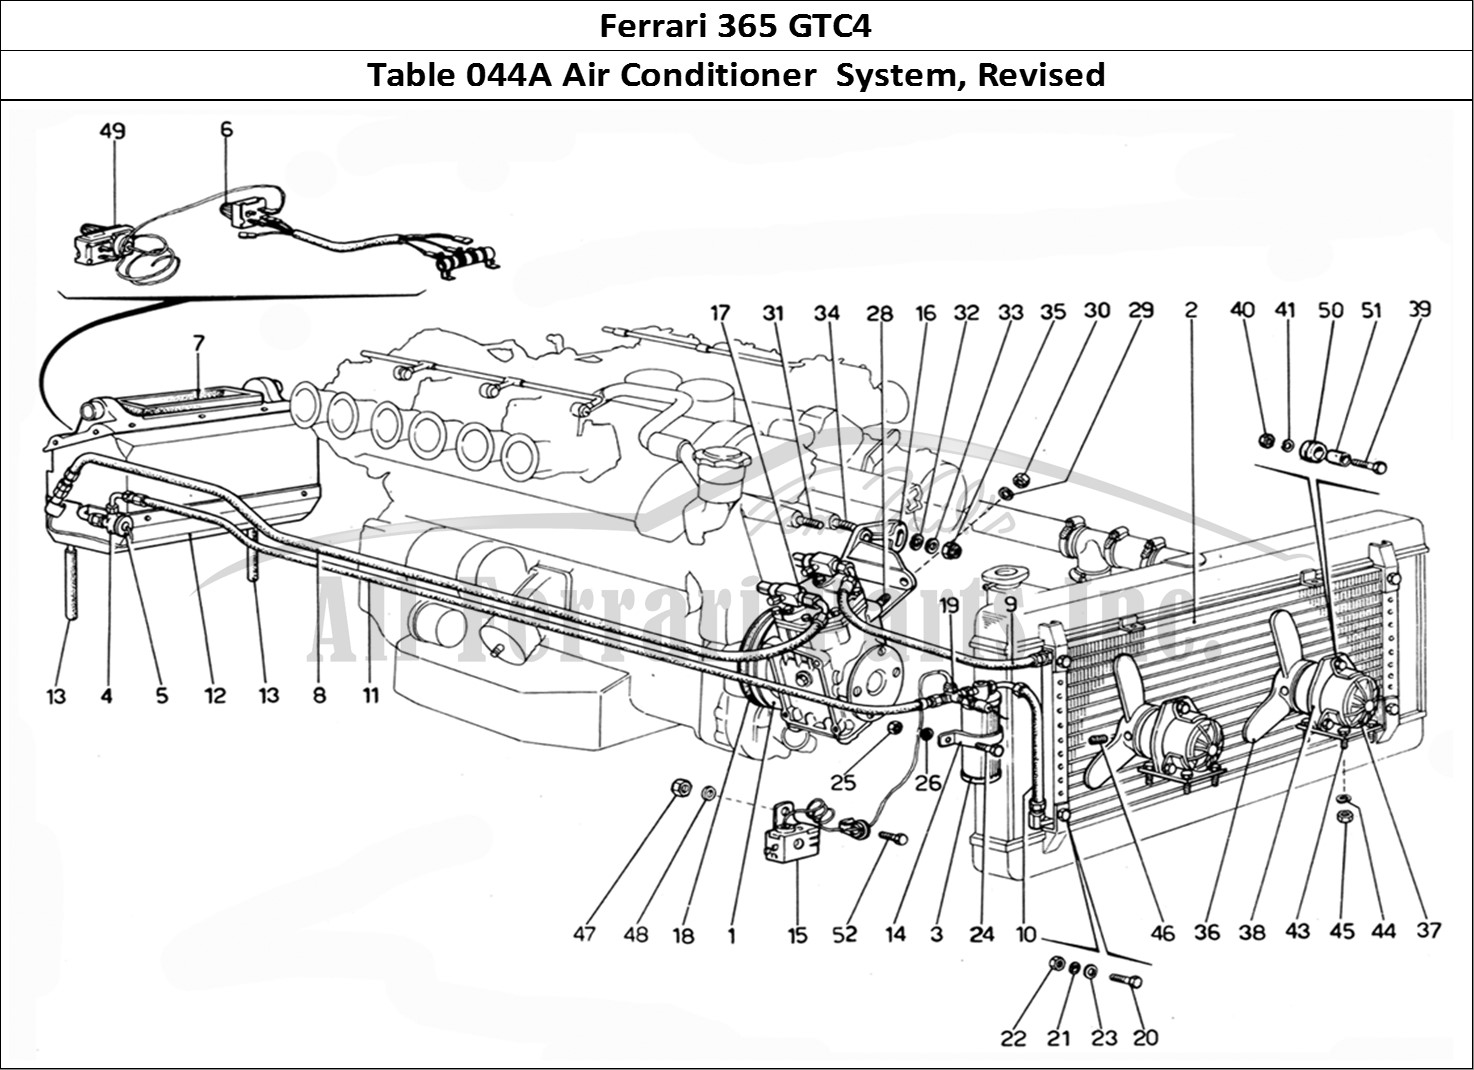 Ferrari Parts Ferrari 365 GTC4 (Mechanical) Page 044 Air condition system - Re